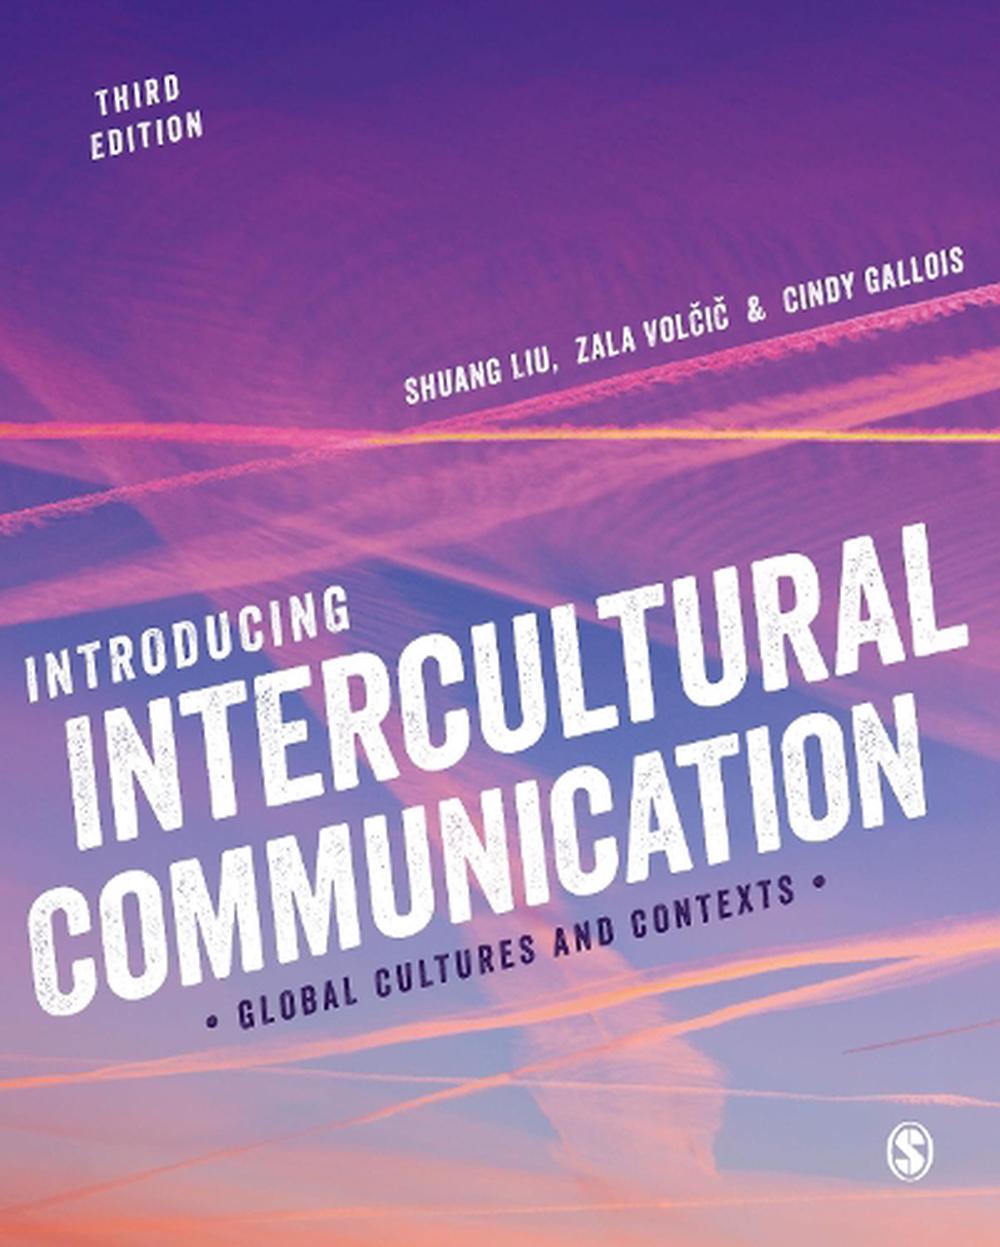 read intercultural communication in contexts